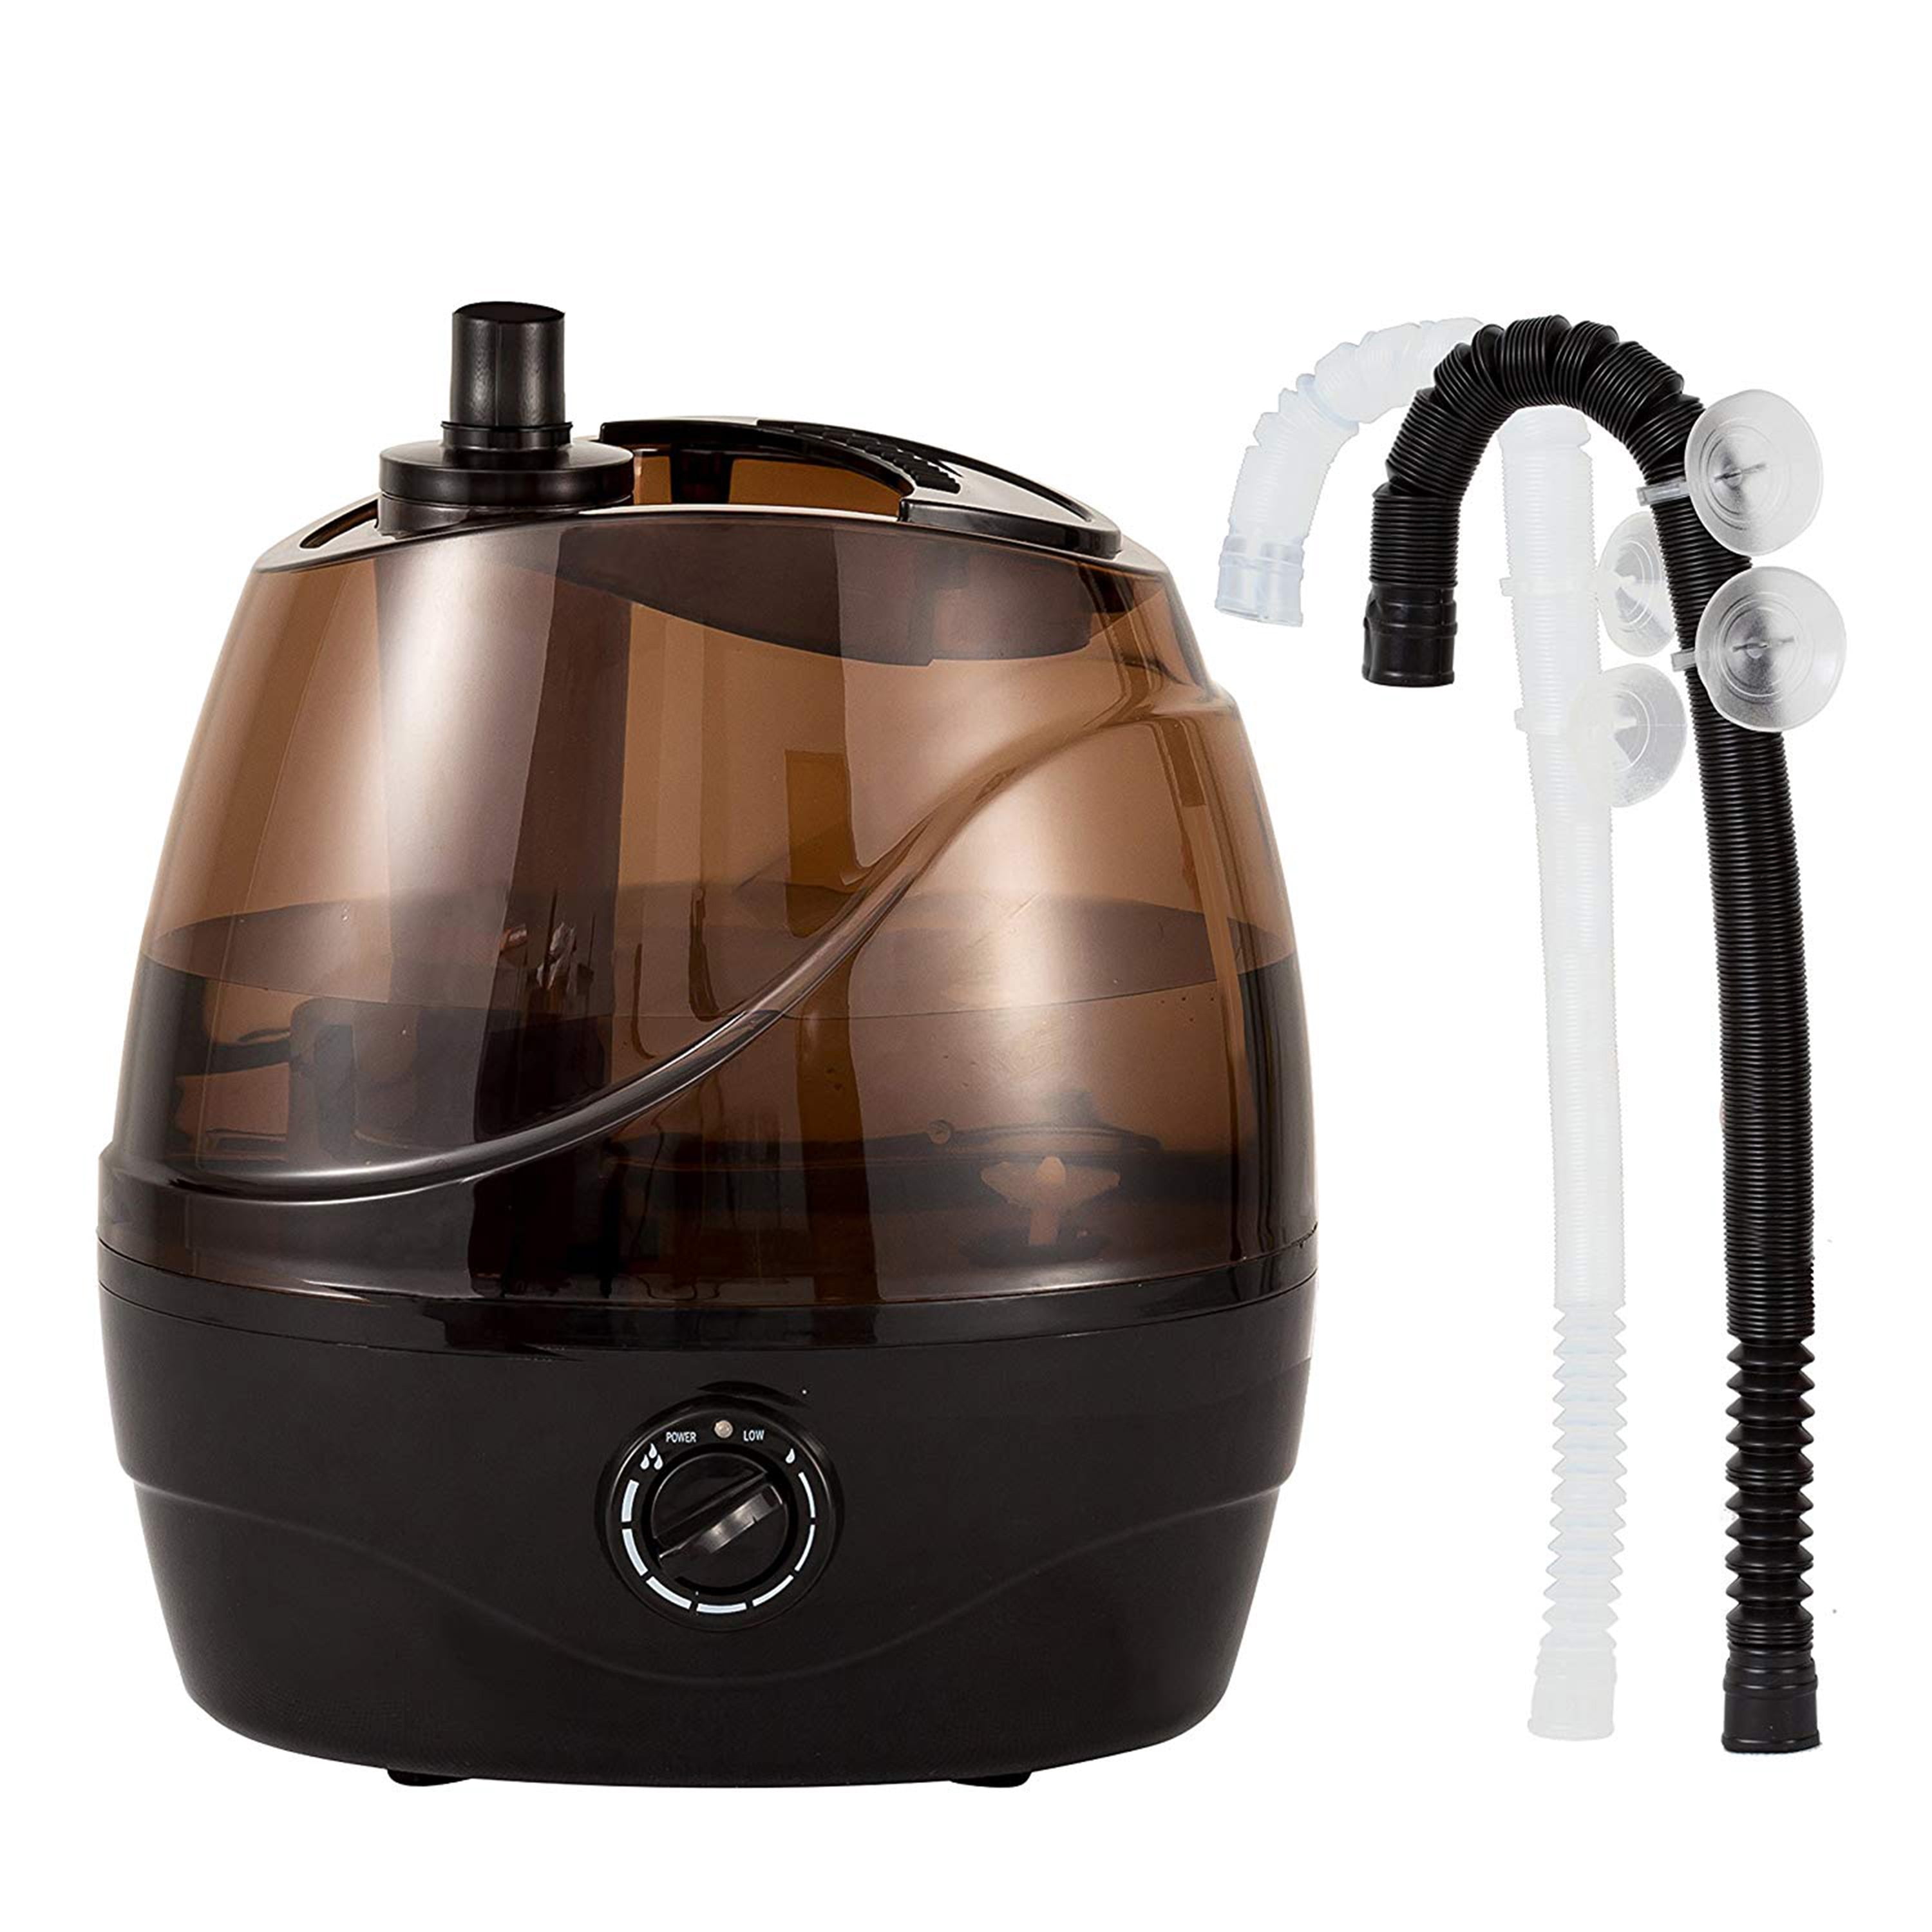 WATFOERS Mist Humidifier Amphibians & Reptile,4L with Hose Adjustable Terrarium Reptile Fogger Humidifier Accessories